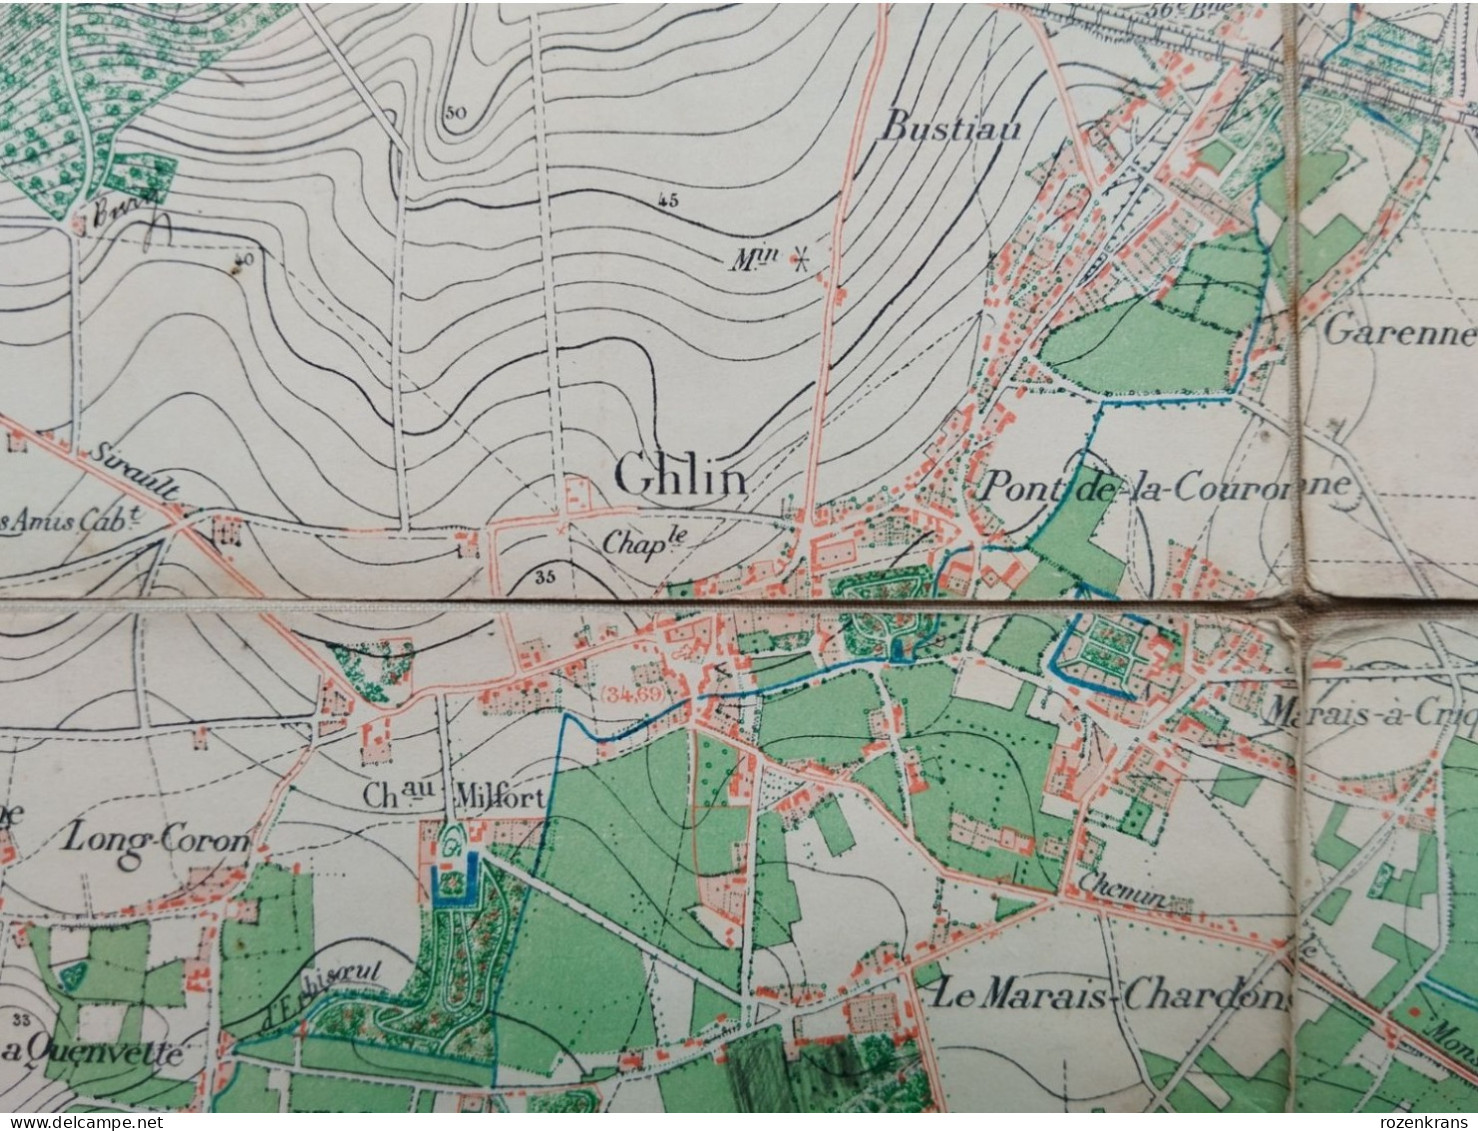 Carte Topographique Toilée Militaire STAFKAART 1870 JURBISE Erbaut Maisieres Nimy Ghlin Verrerie Masnuy St Jean Pierre - Topographical Maps